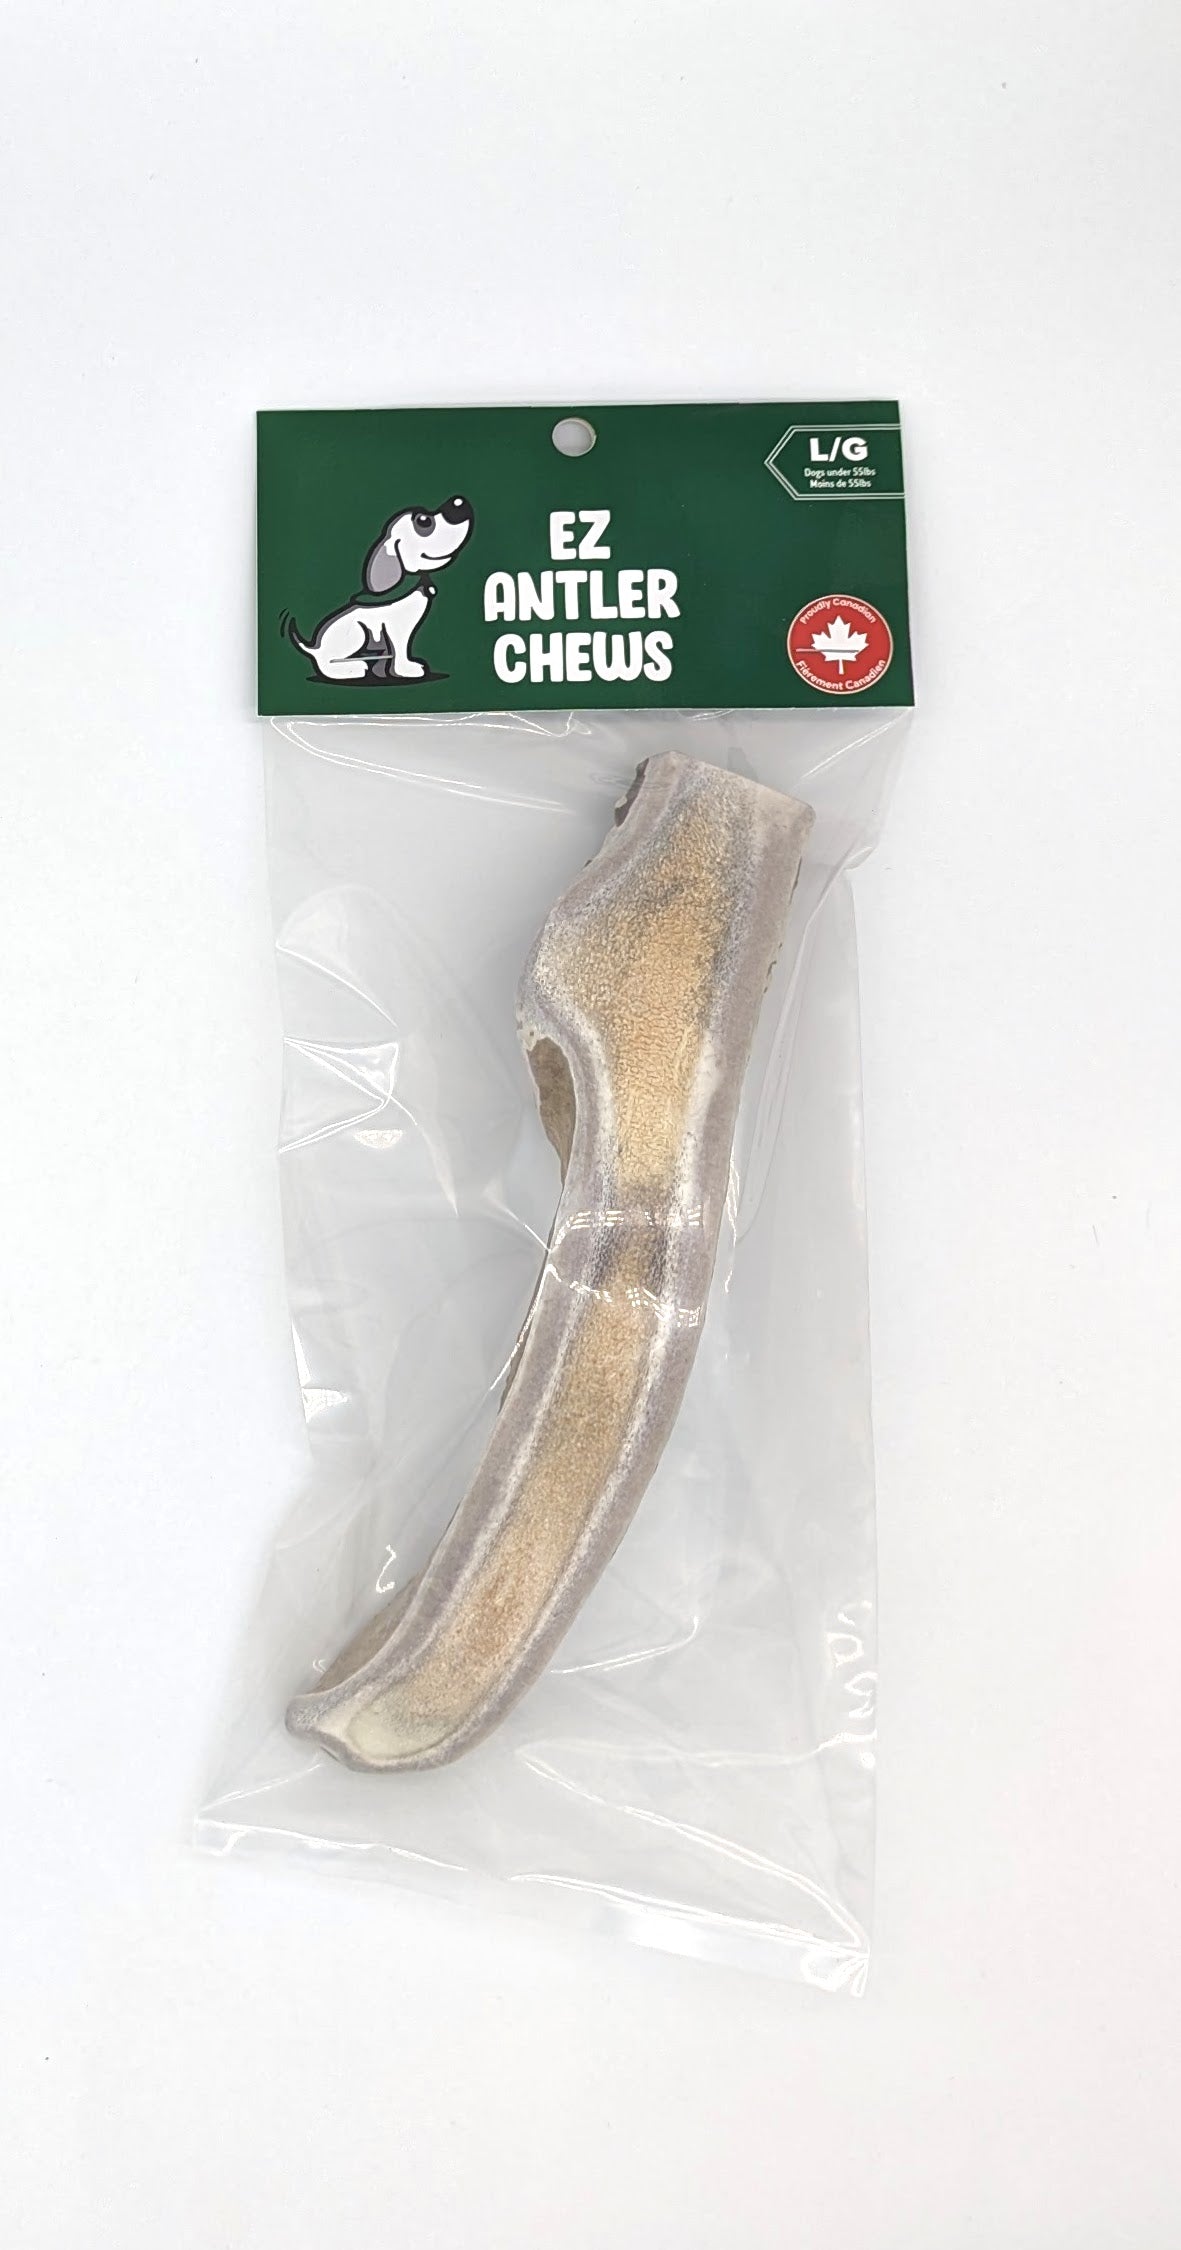 Large Deer Antler Chew (Under 55lb)